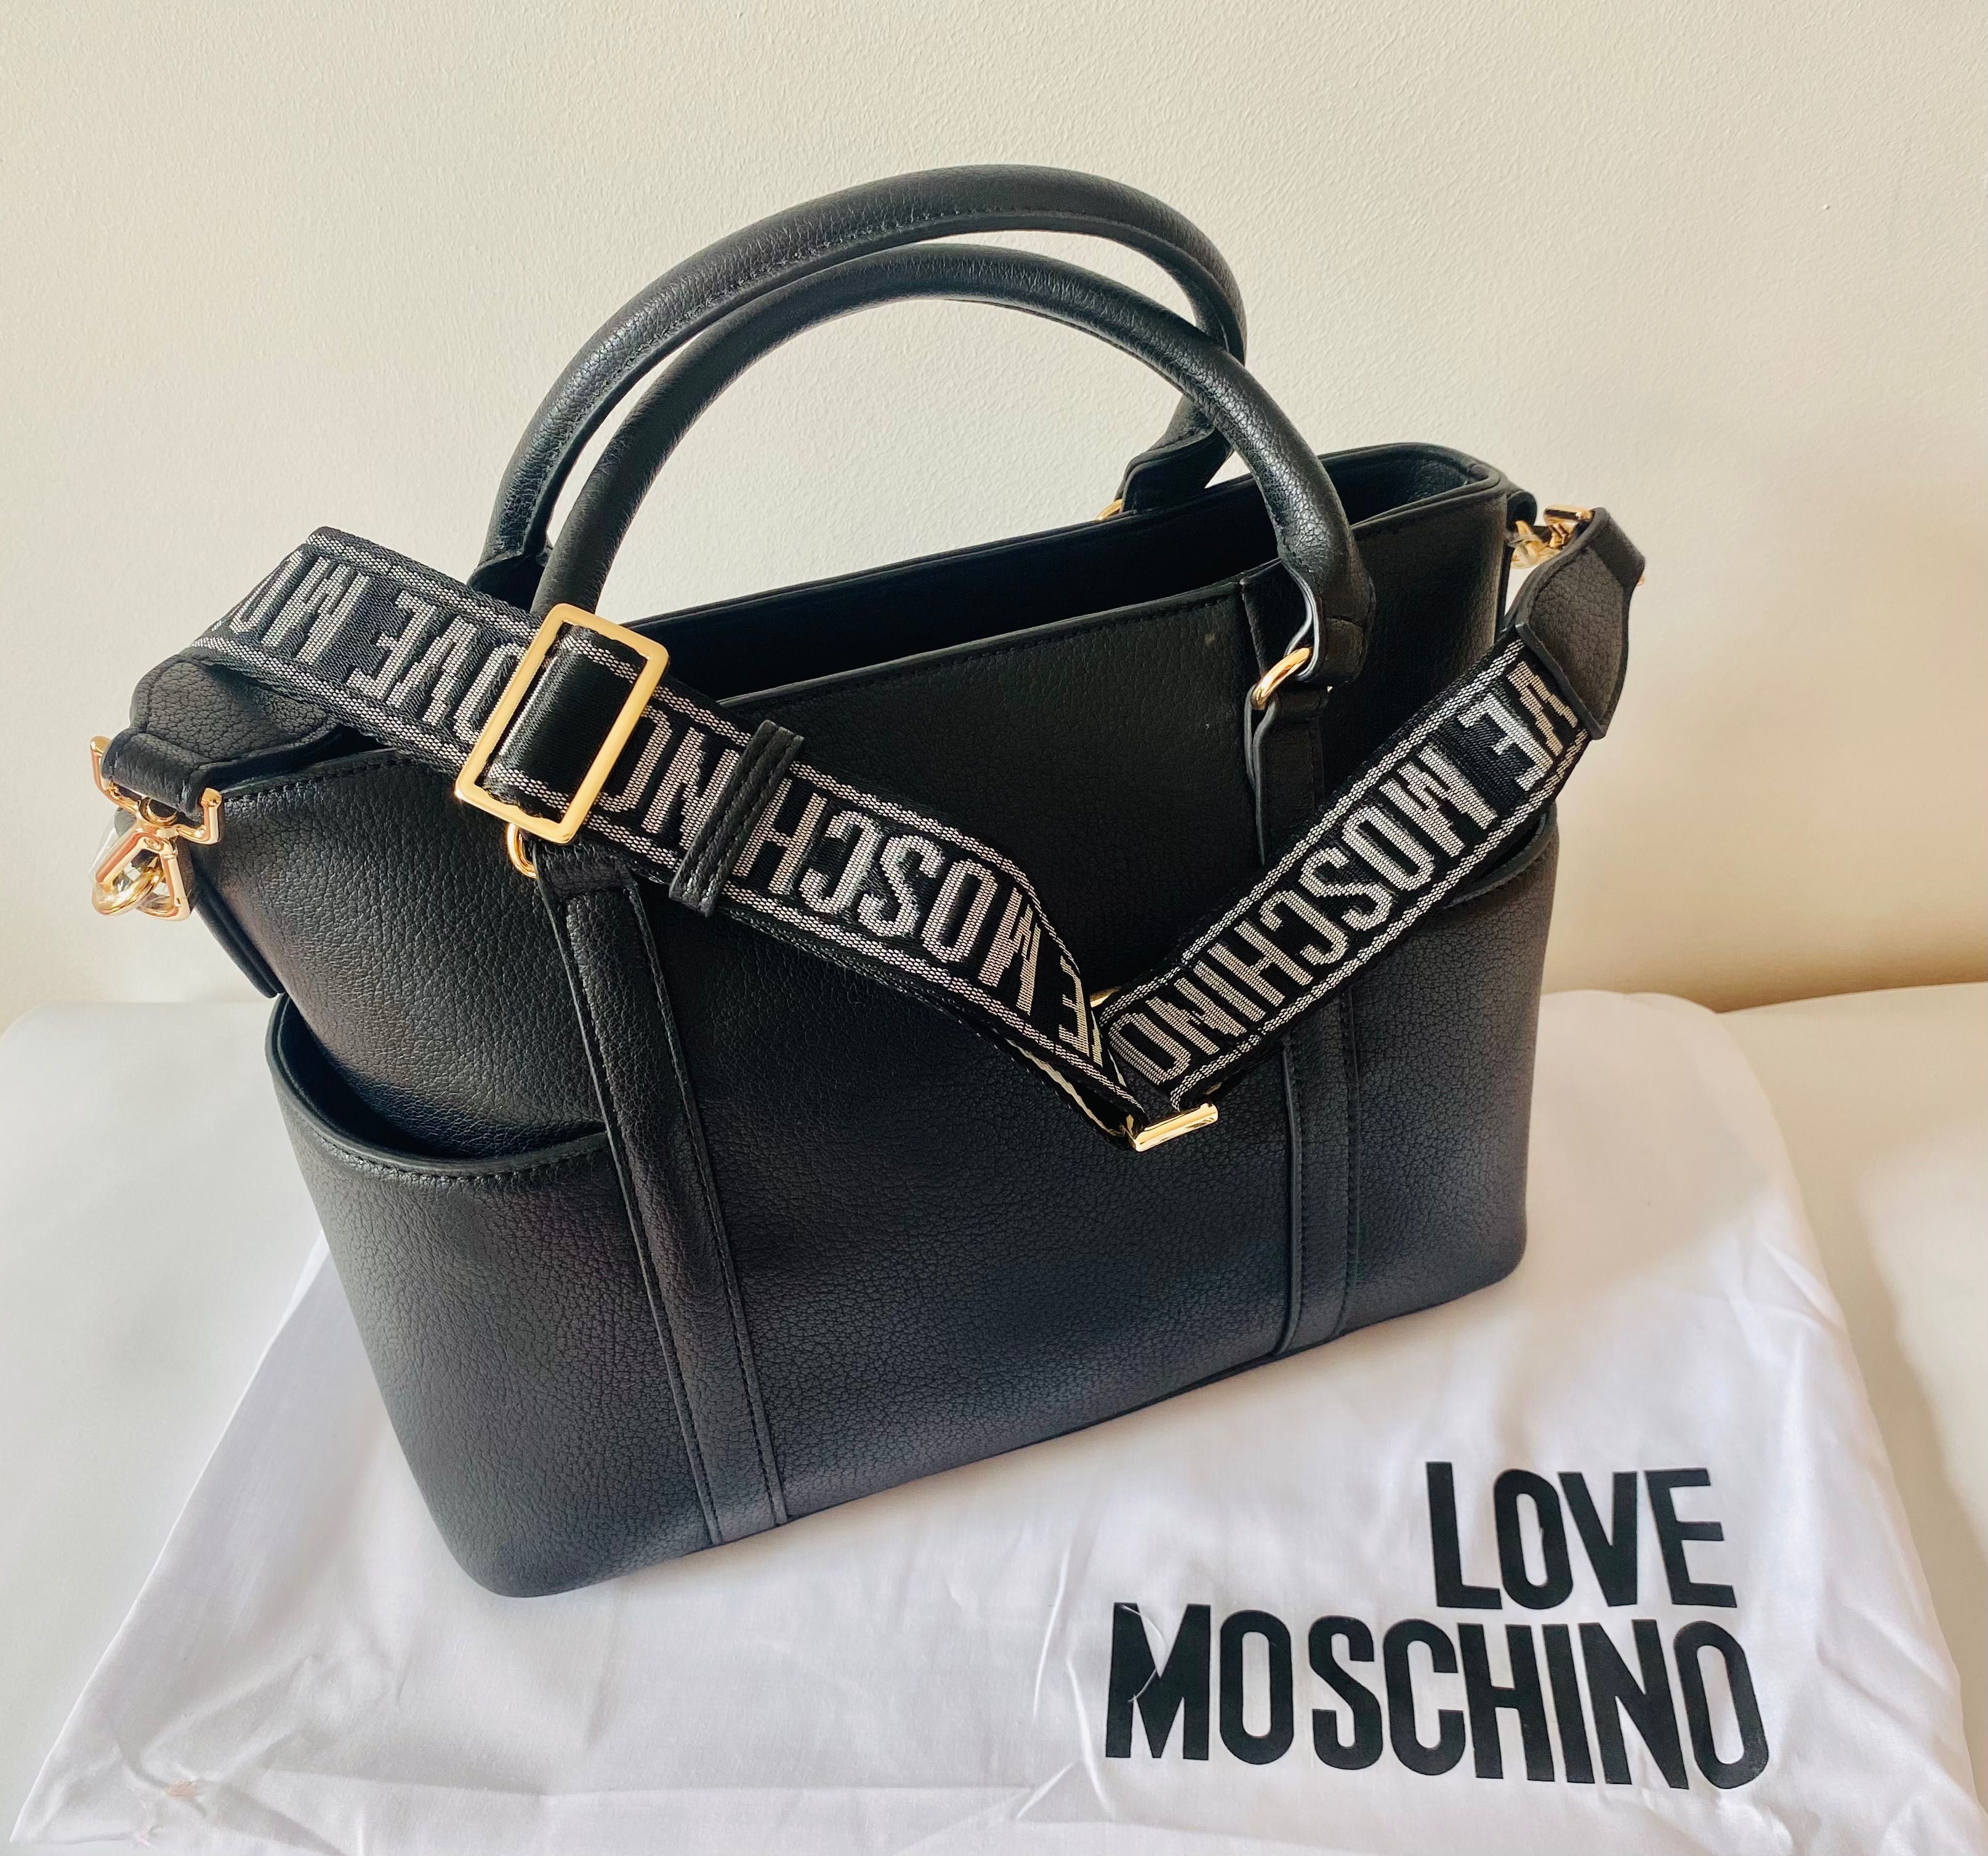 Torebka typu shopper z kolekcji Love Moschino.